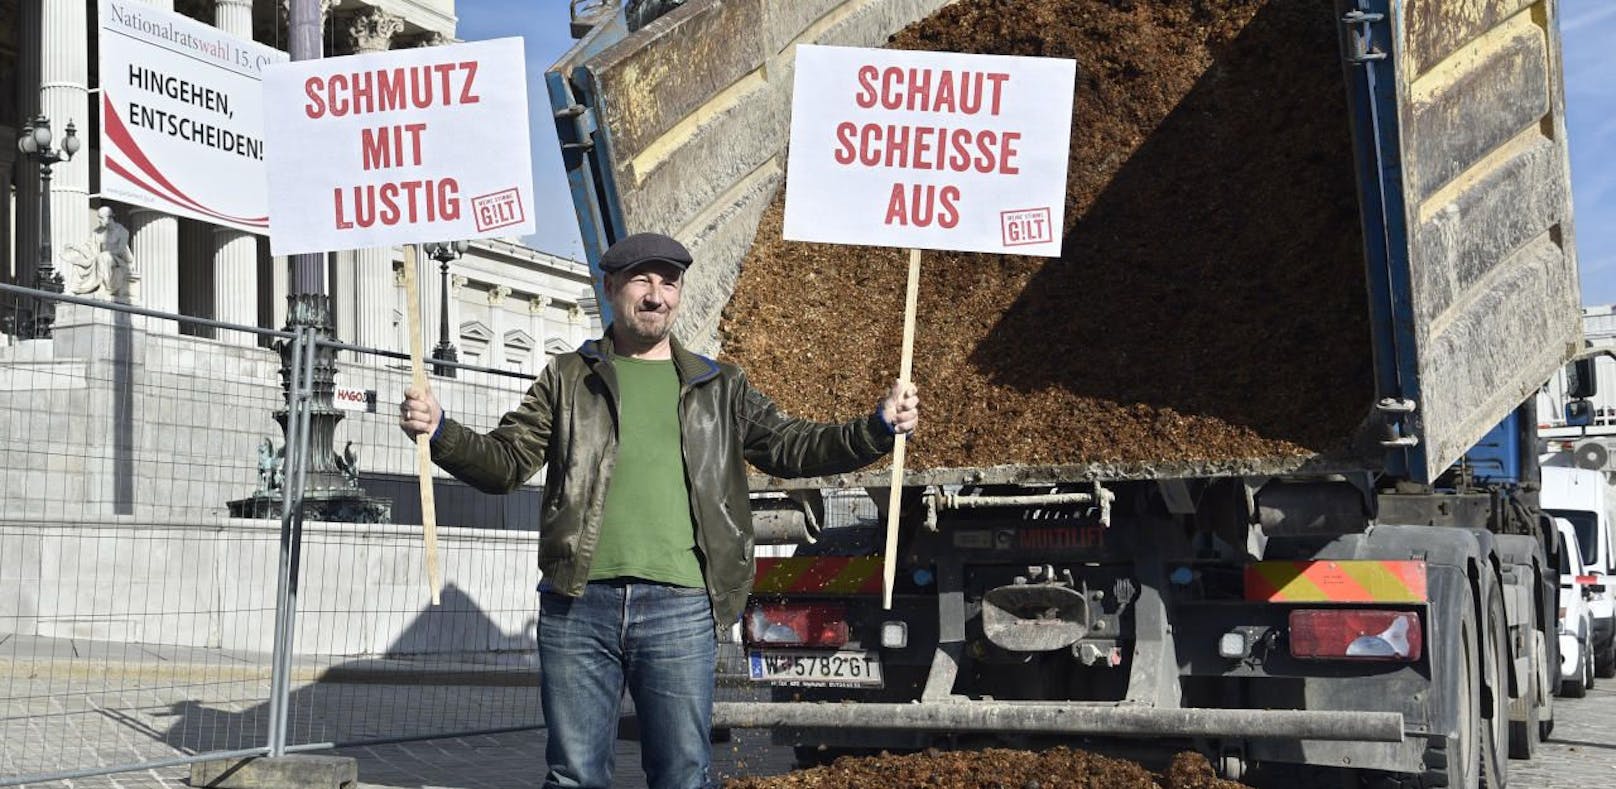 Roland Düringer, damals &quot;G!LT&quot;-Obmann, bei einer Fotoaktion am 4. Oktober 2017 vor dem Parlament in Wien.